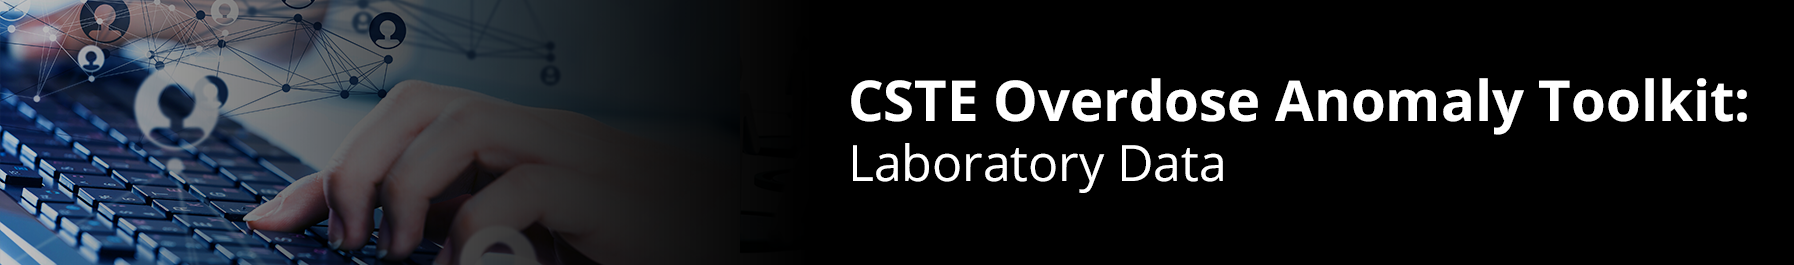 CSTE Overdose Anomaly Toolkit: Laboratory Data